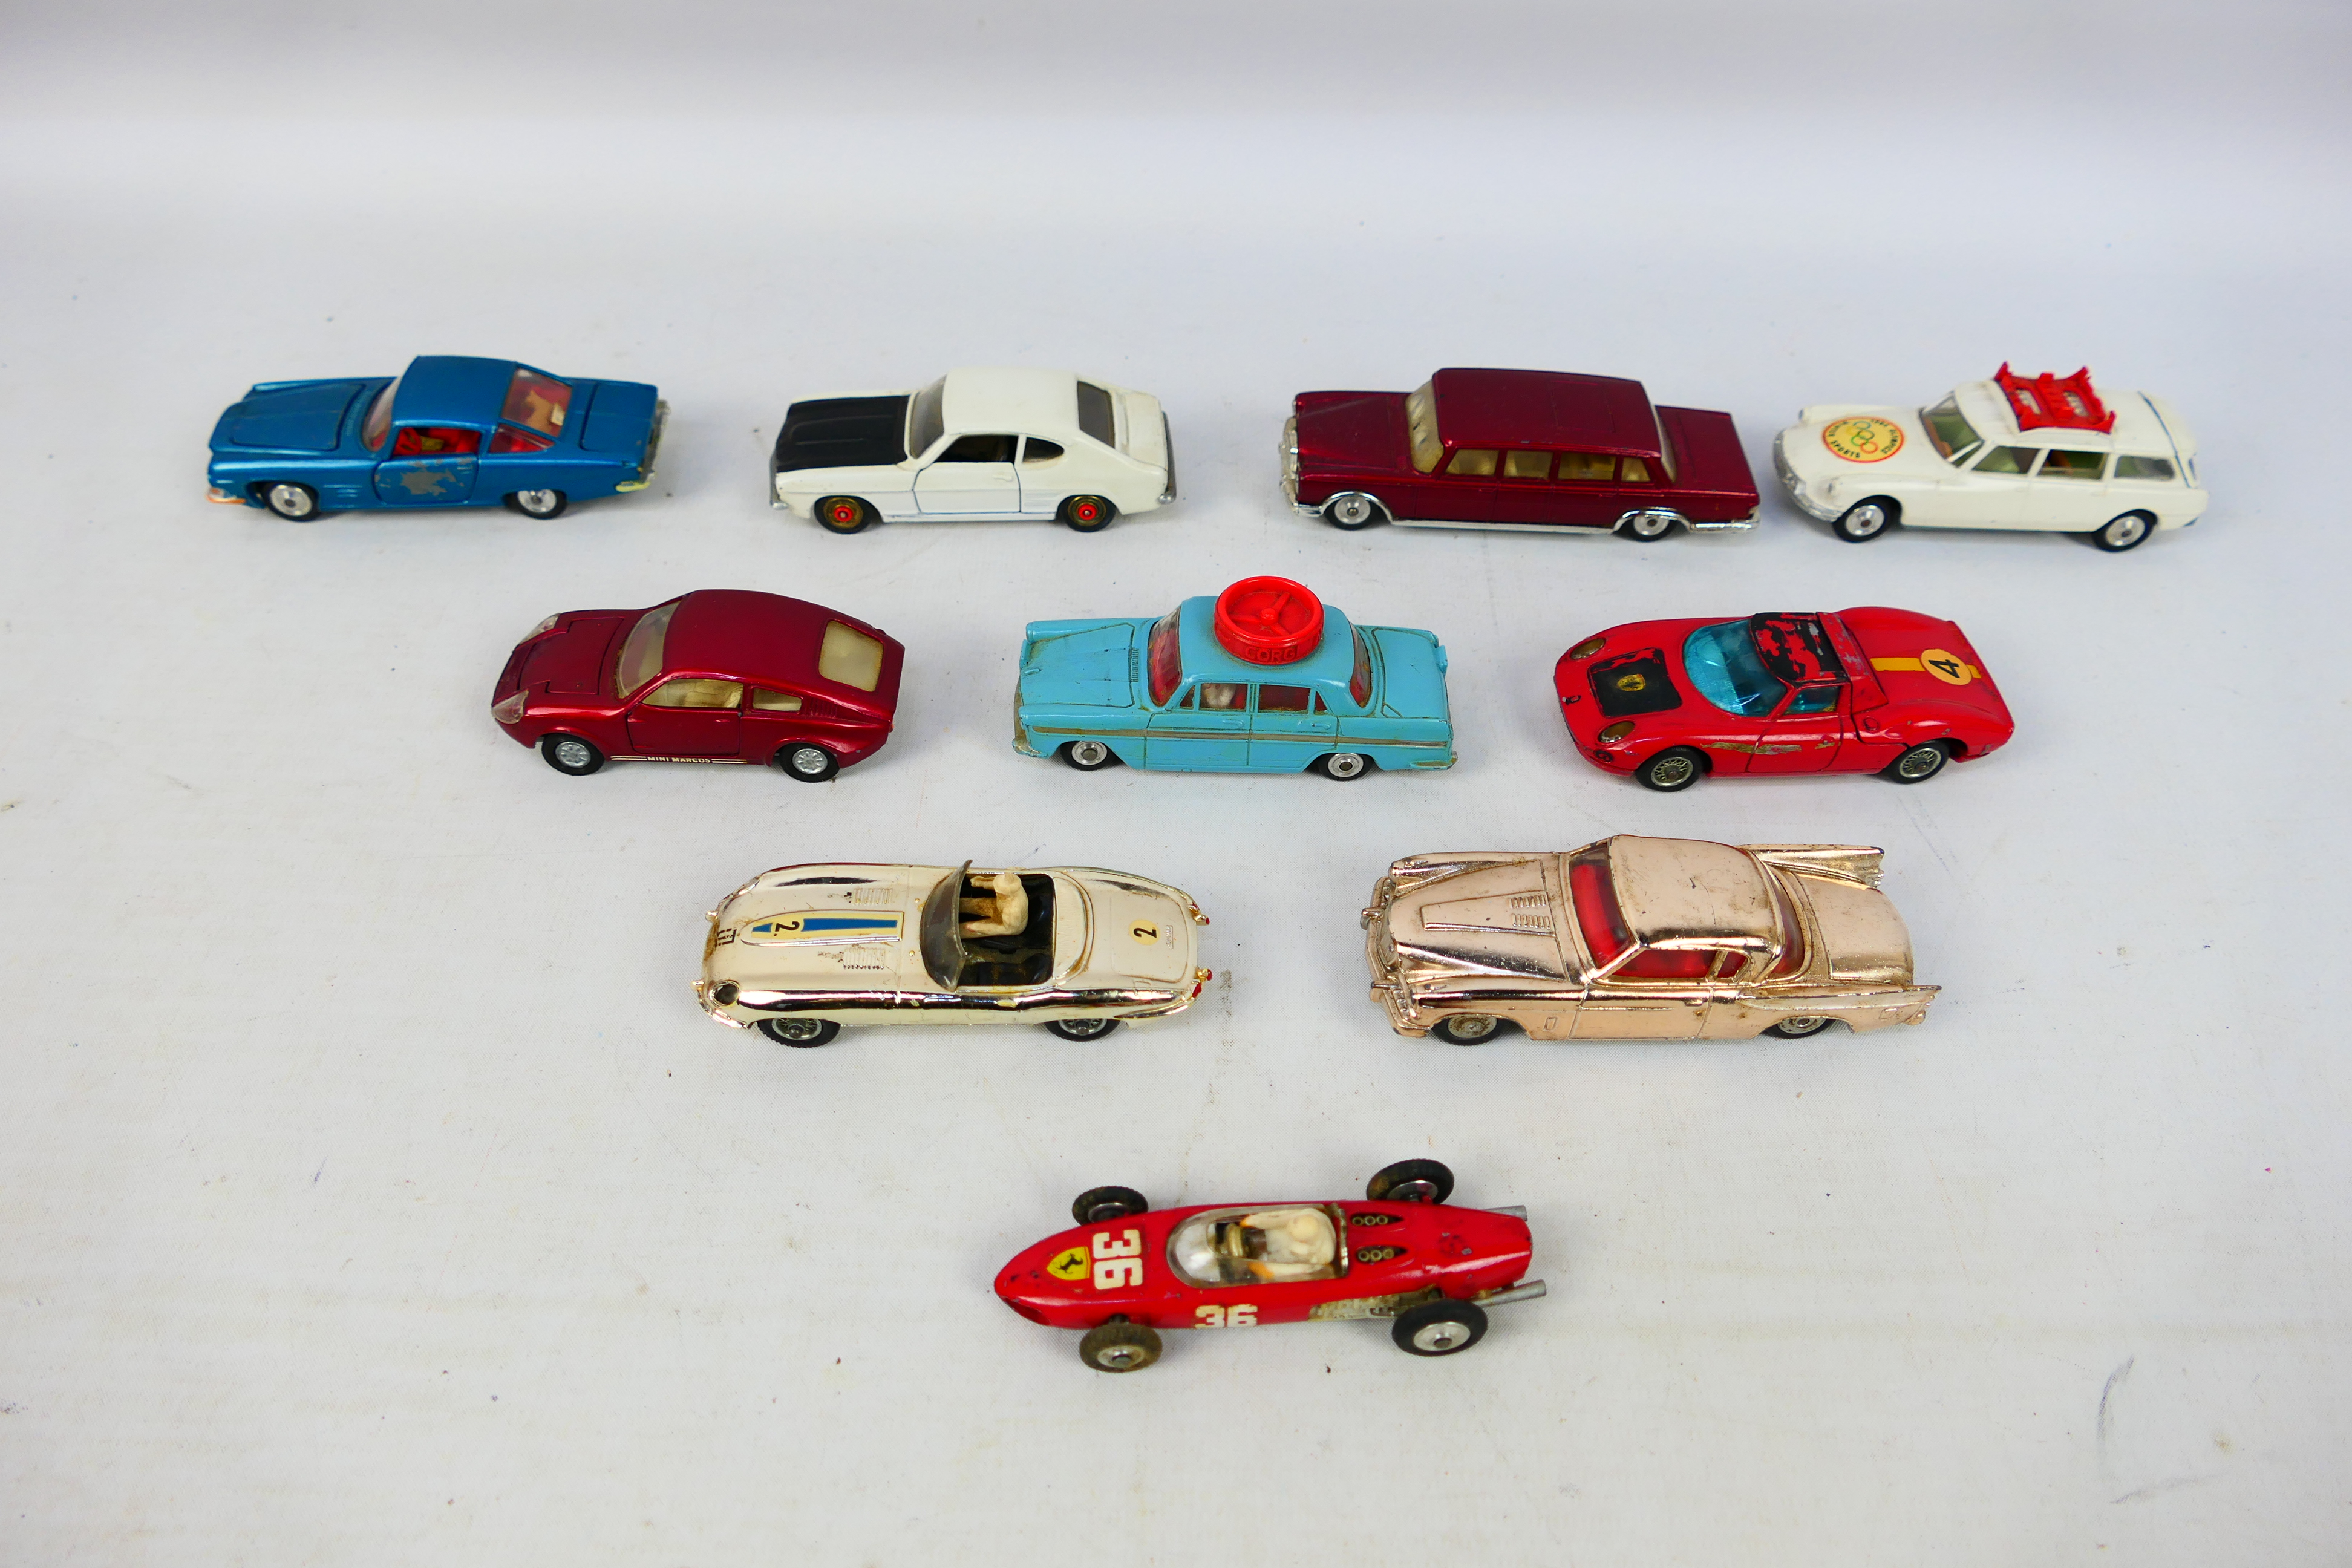 Corgi Toys - An unboxed group of 10 diecast model cars from Corgi Toys.